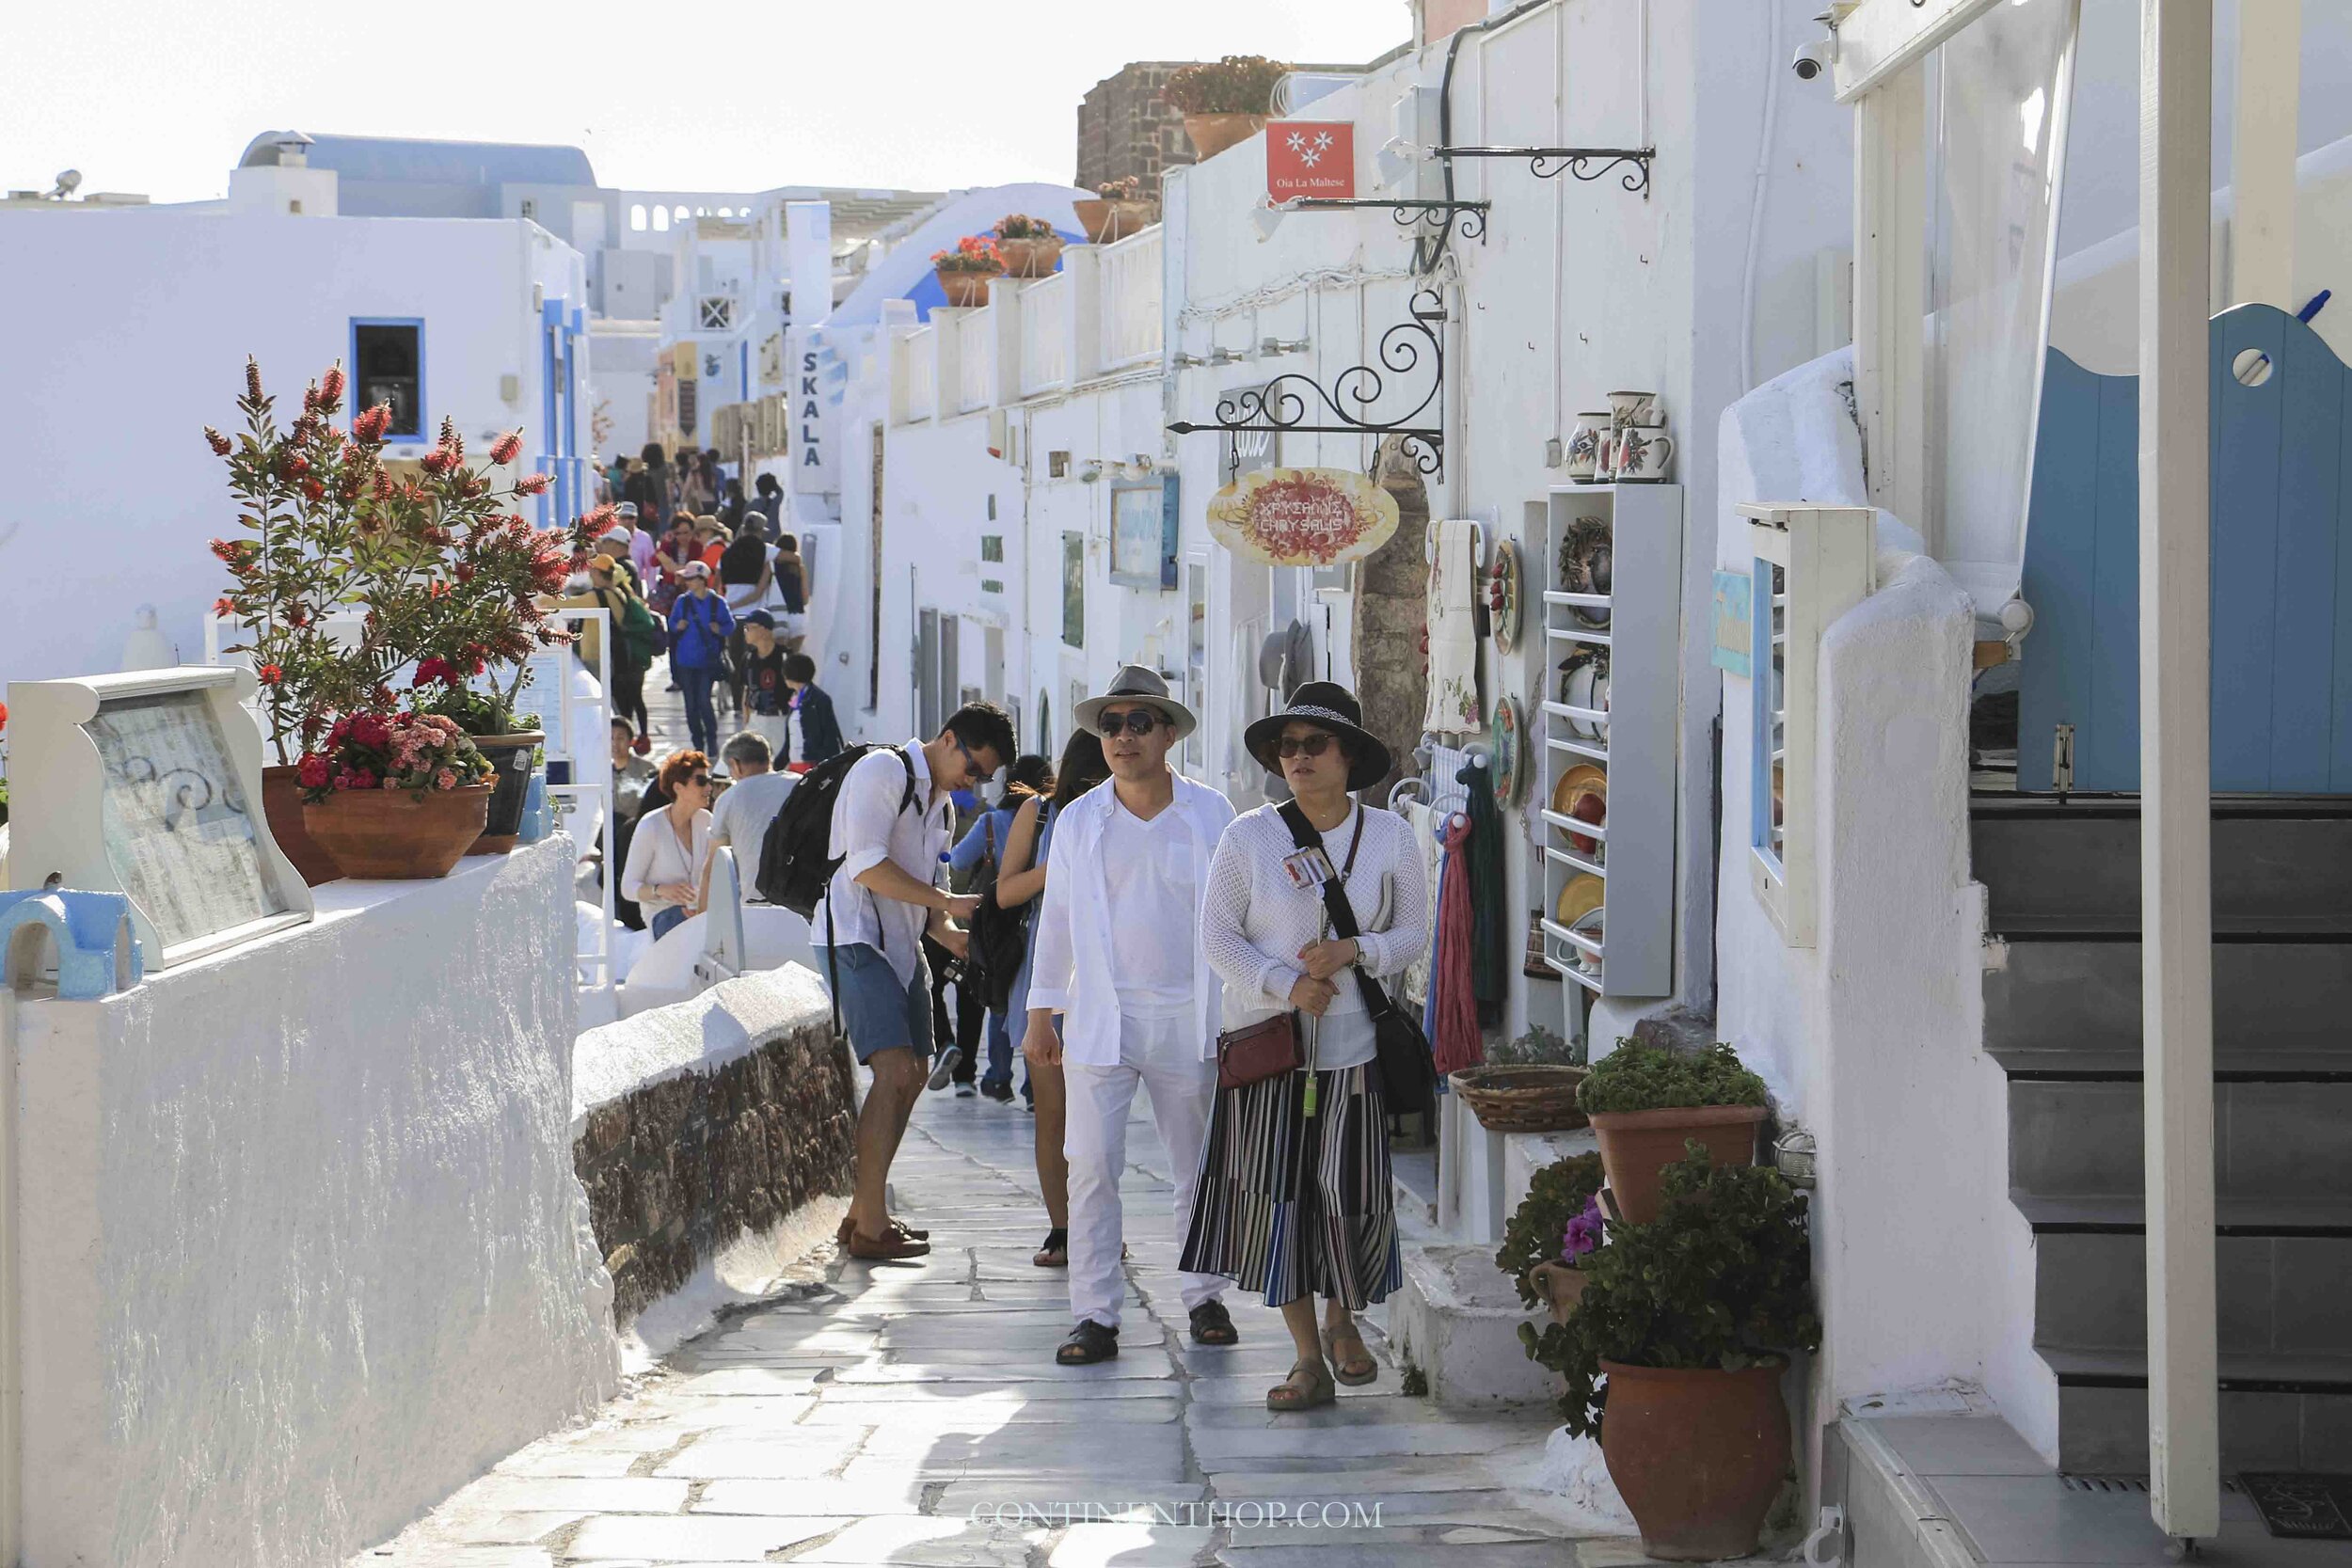 People walking on a street in Oia Santorini